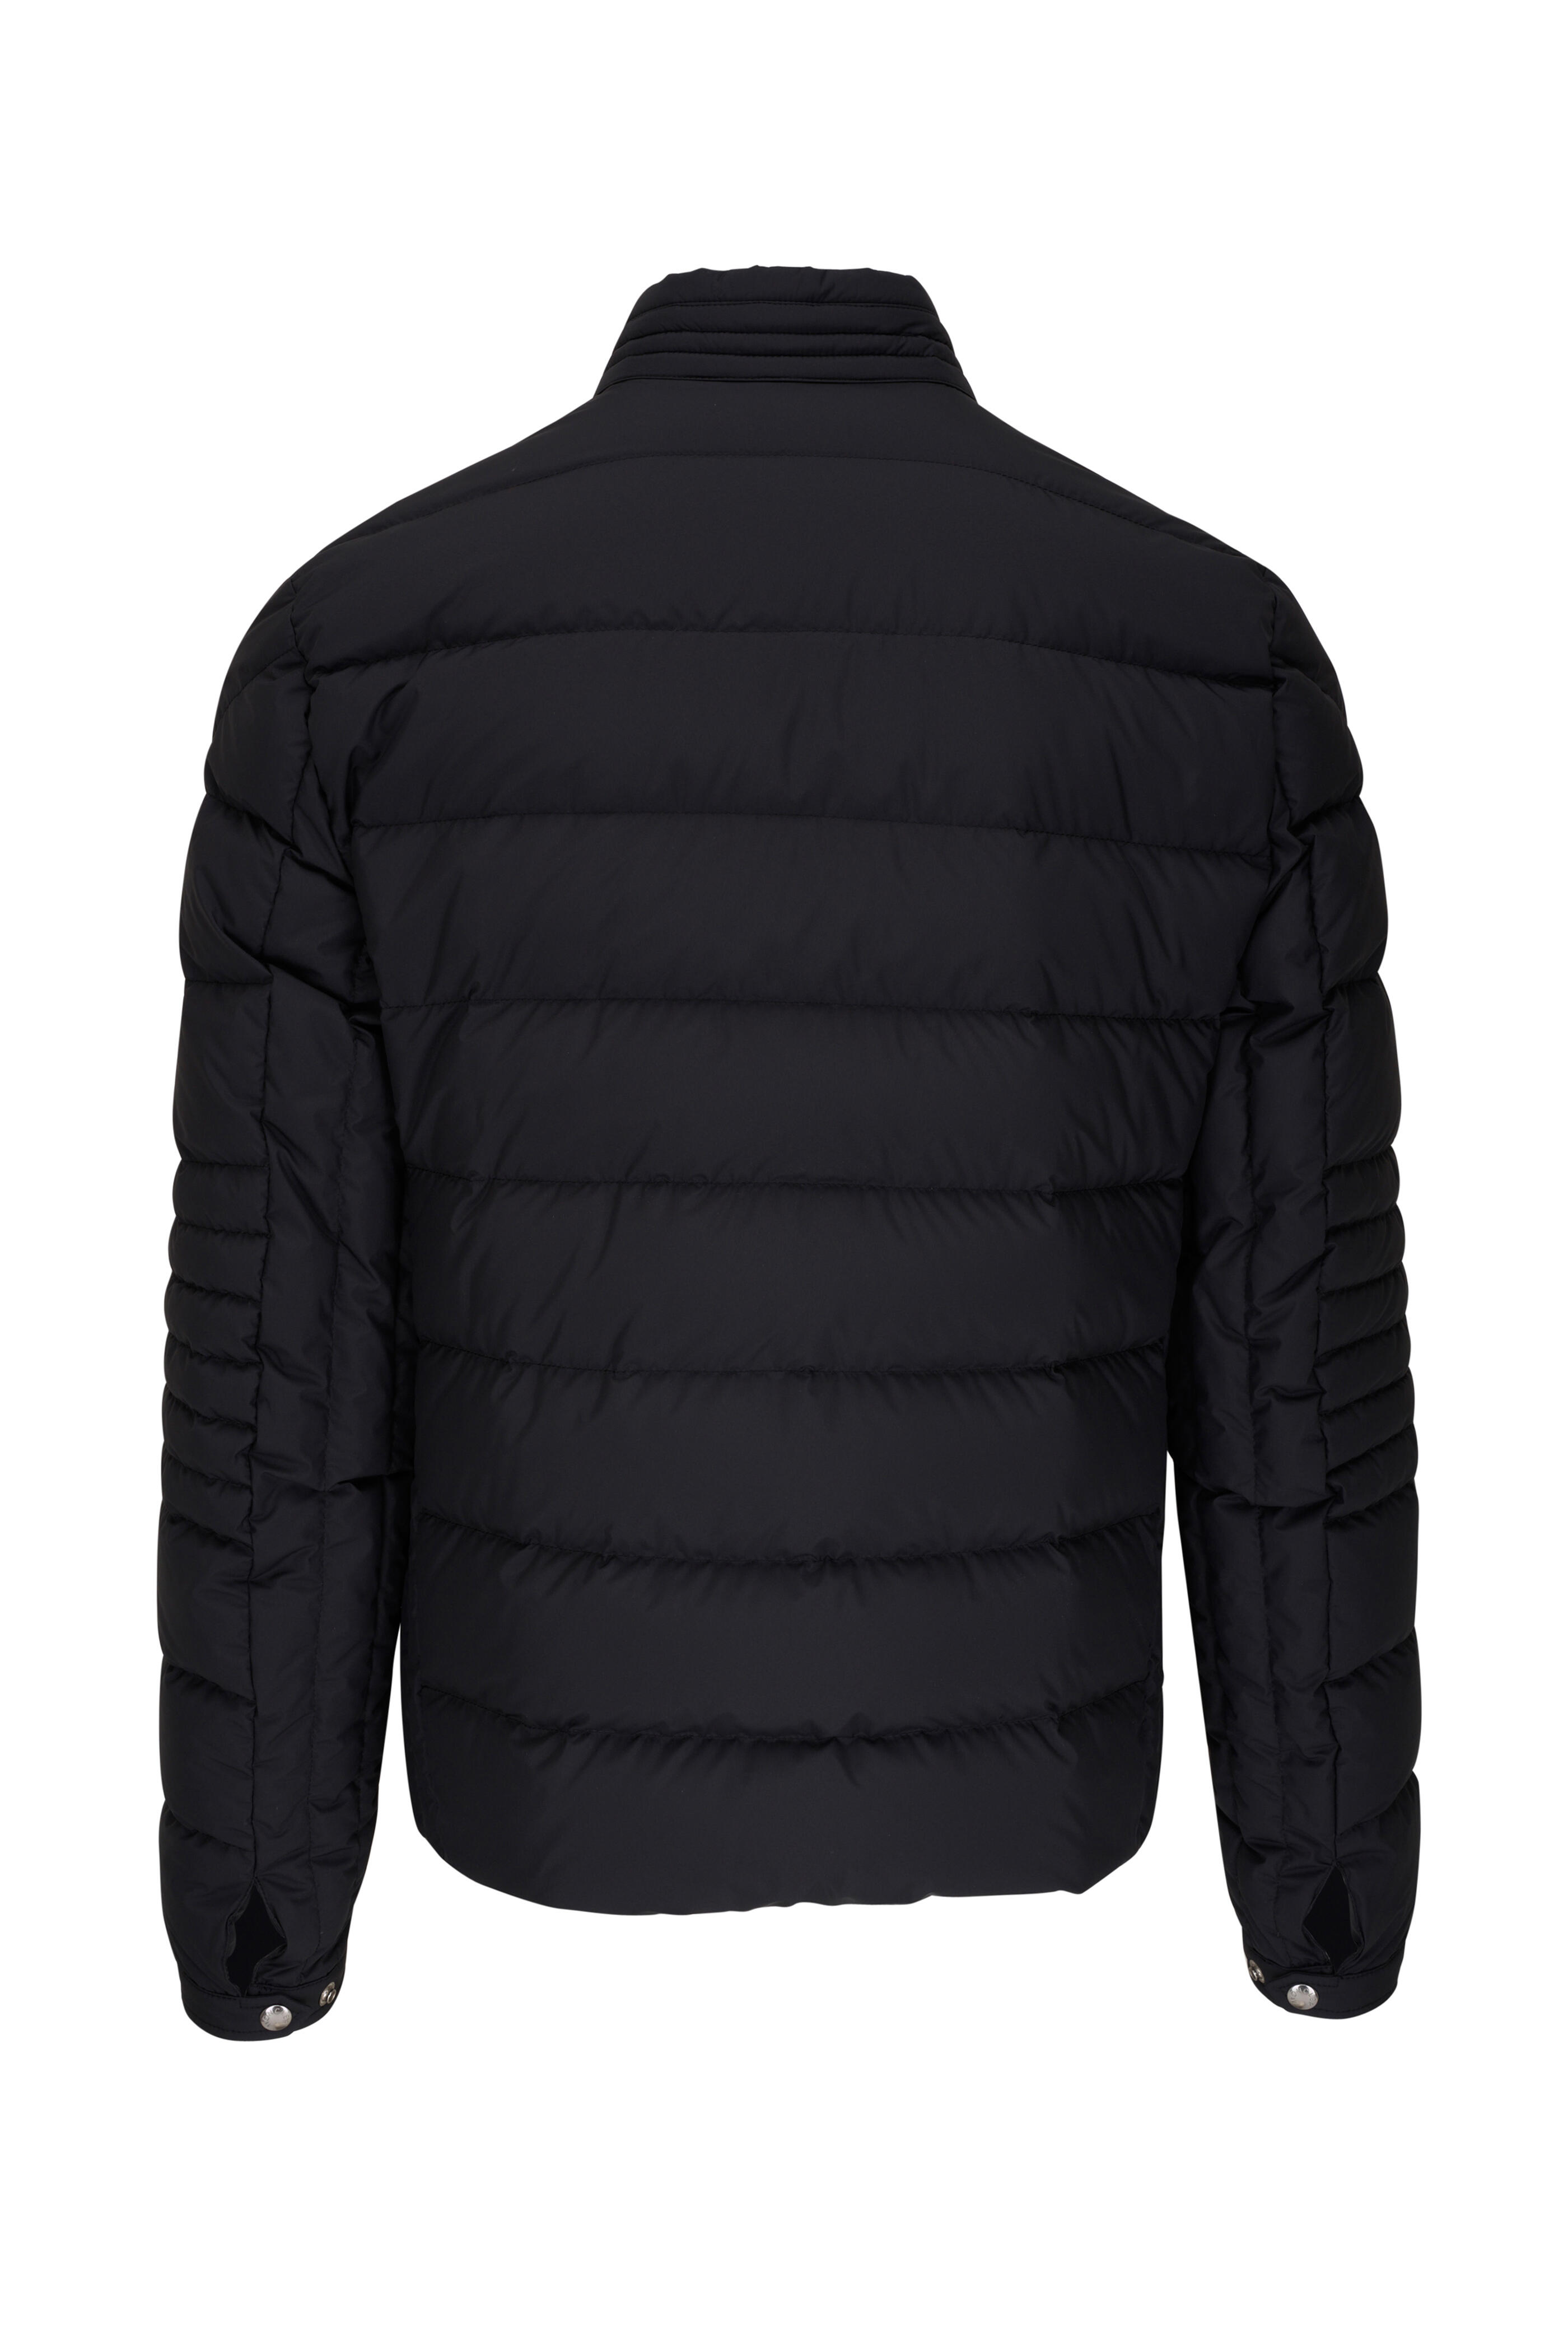 Moncler - Authie Biker Black Quilted Nylon Jacket